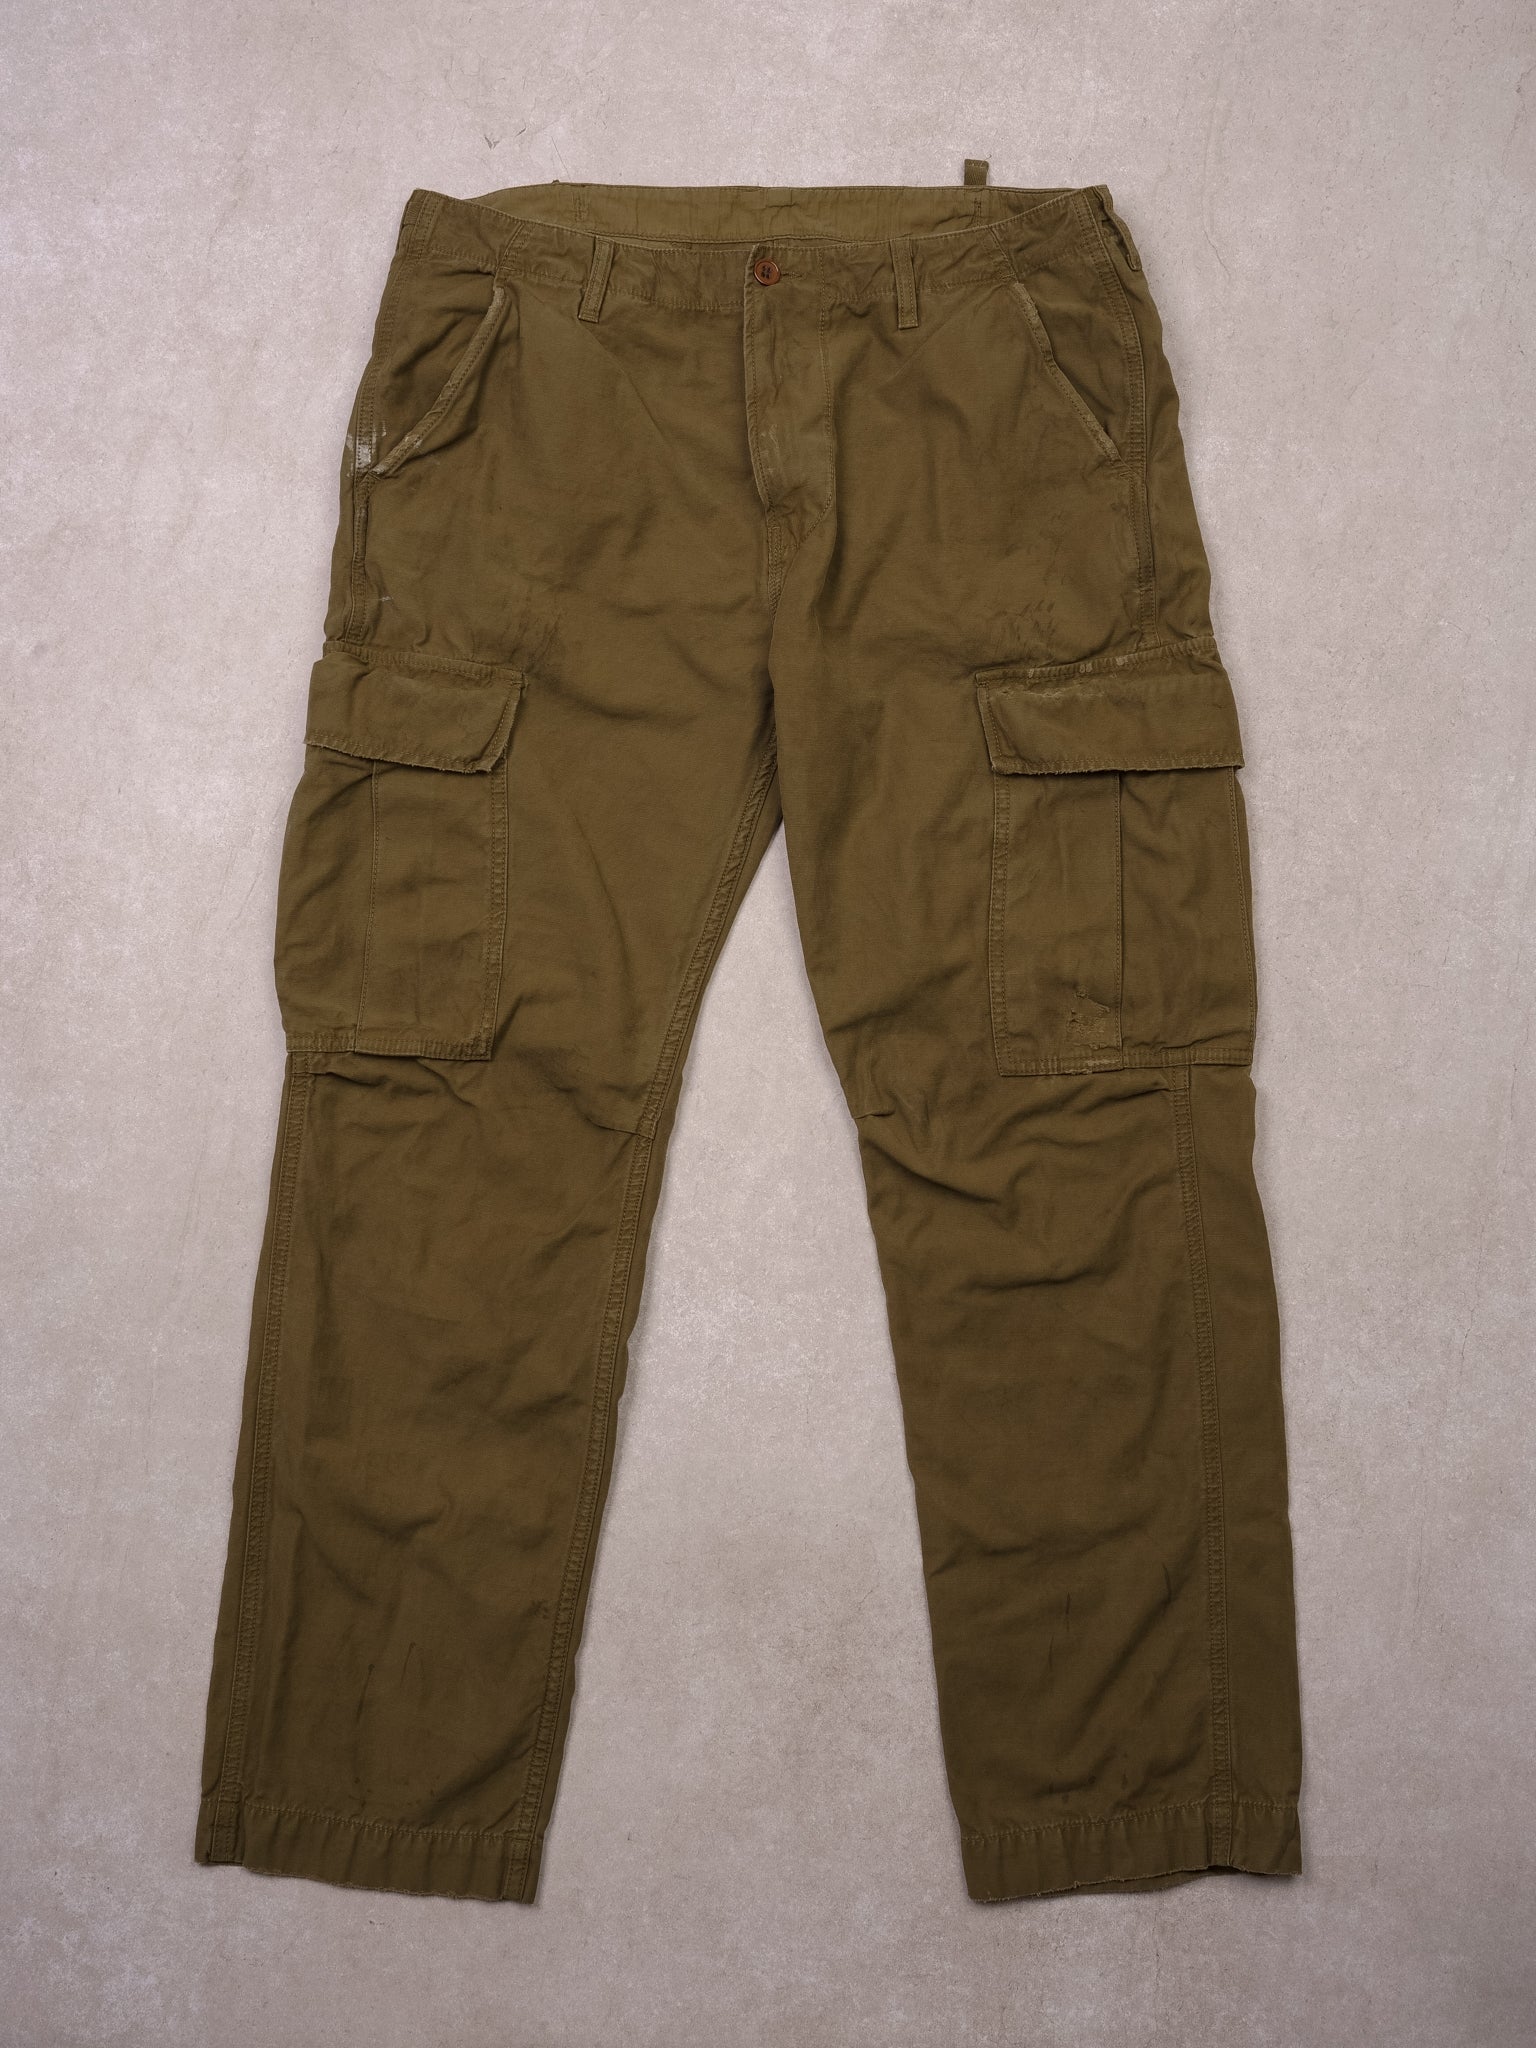 Vintage Washed Olive Green Levi's Cargo Pants (38x30)